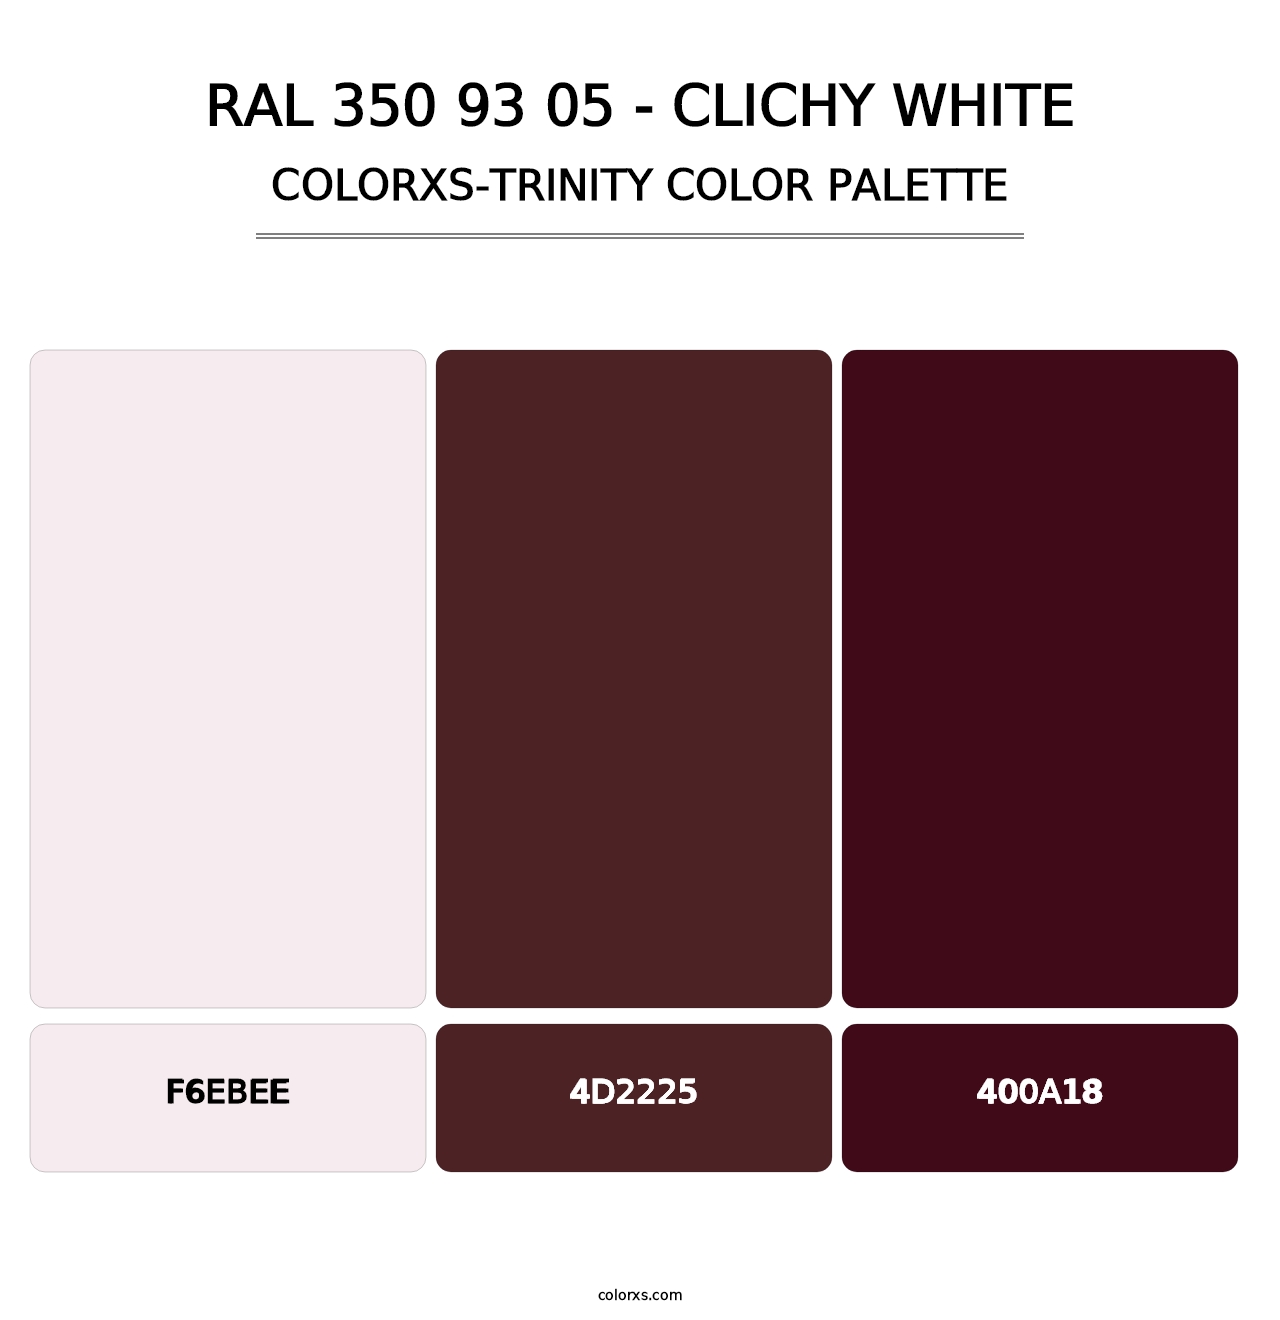 RAL 350 93 05 - Clichy White - Colorxs Trinity Palette